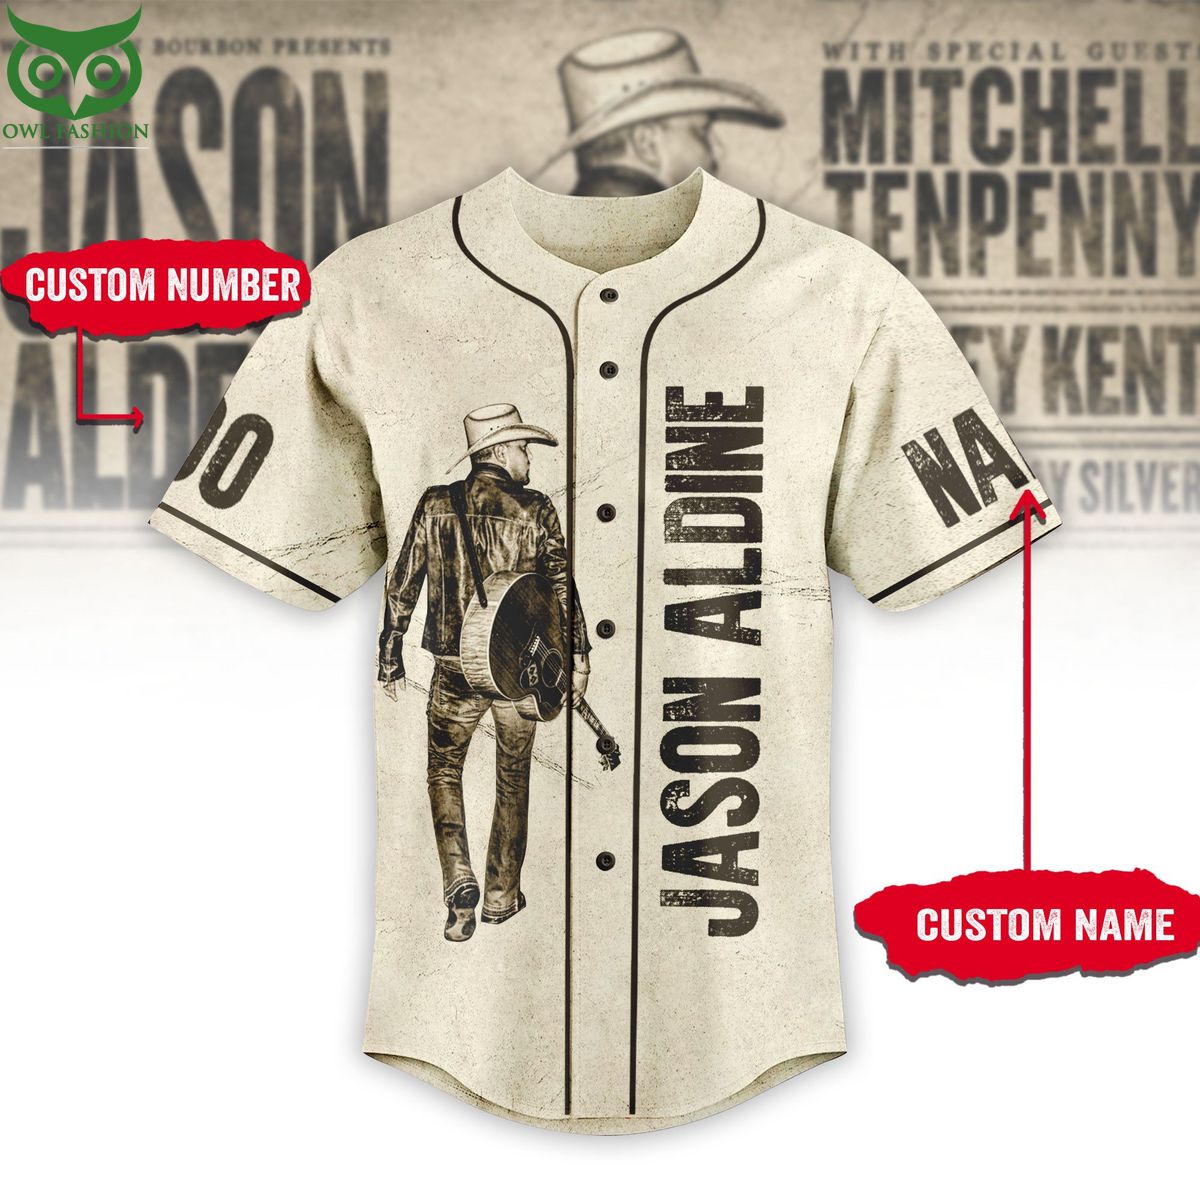 Jason Aldean Highway Desperado Custom Baseball Jersey Shirt Best picture ever